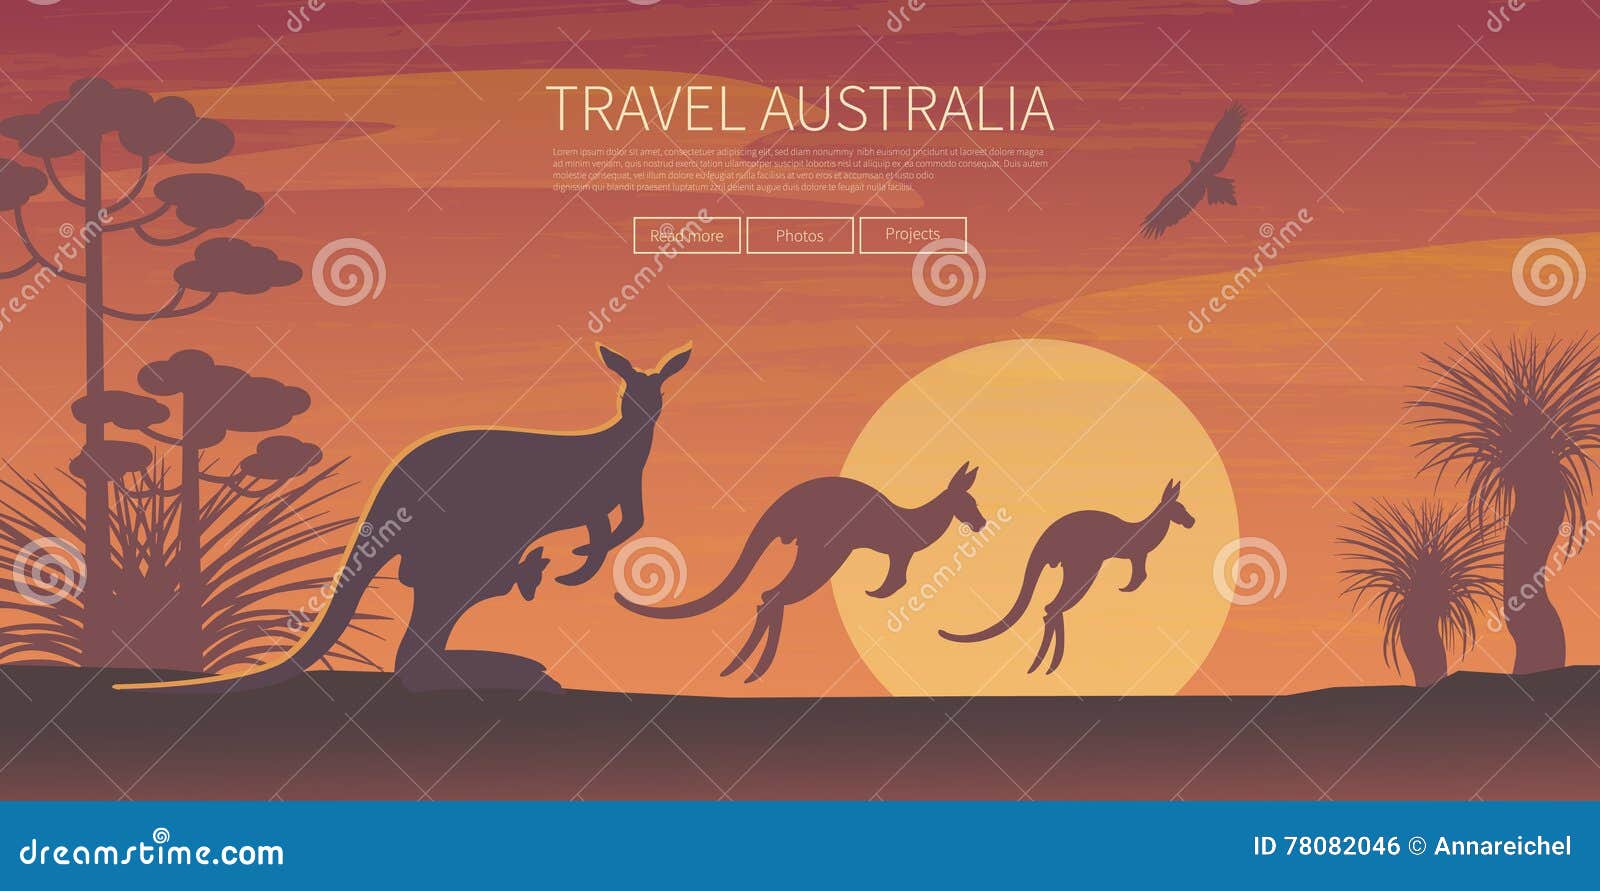 australian landscape poster